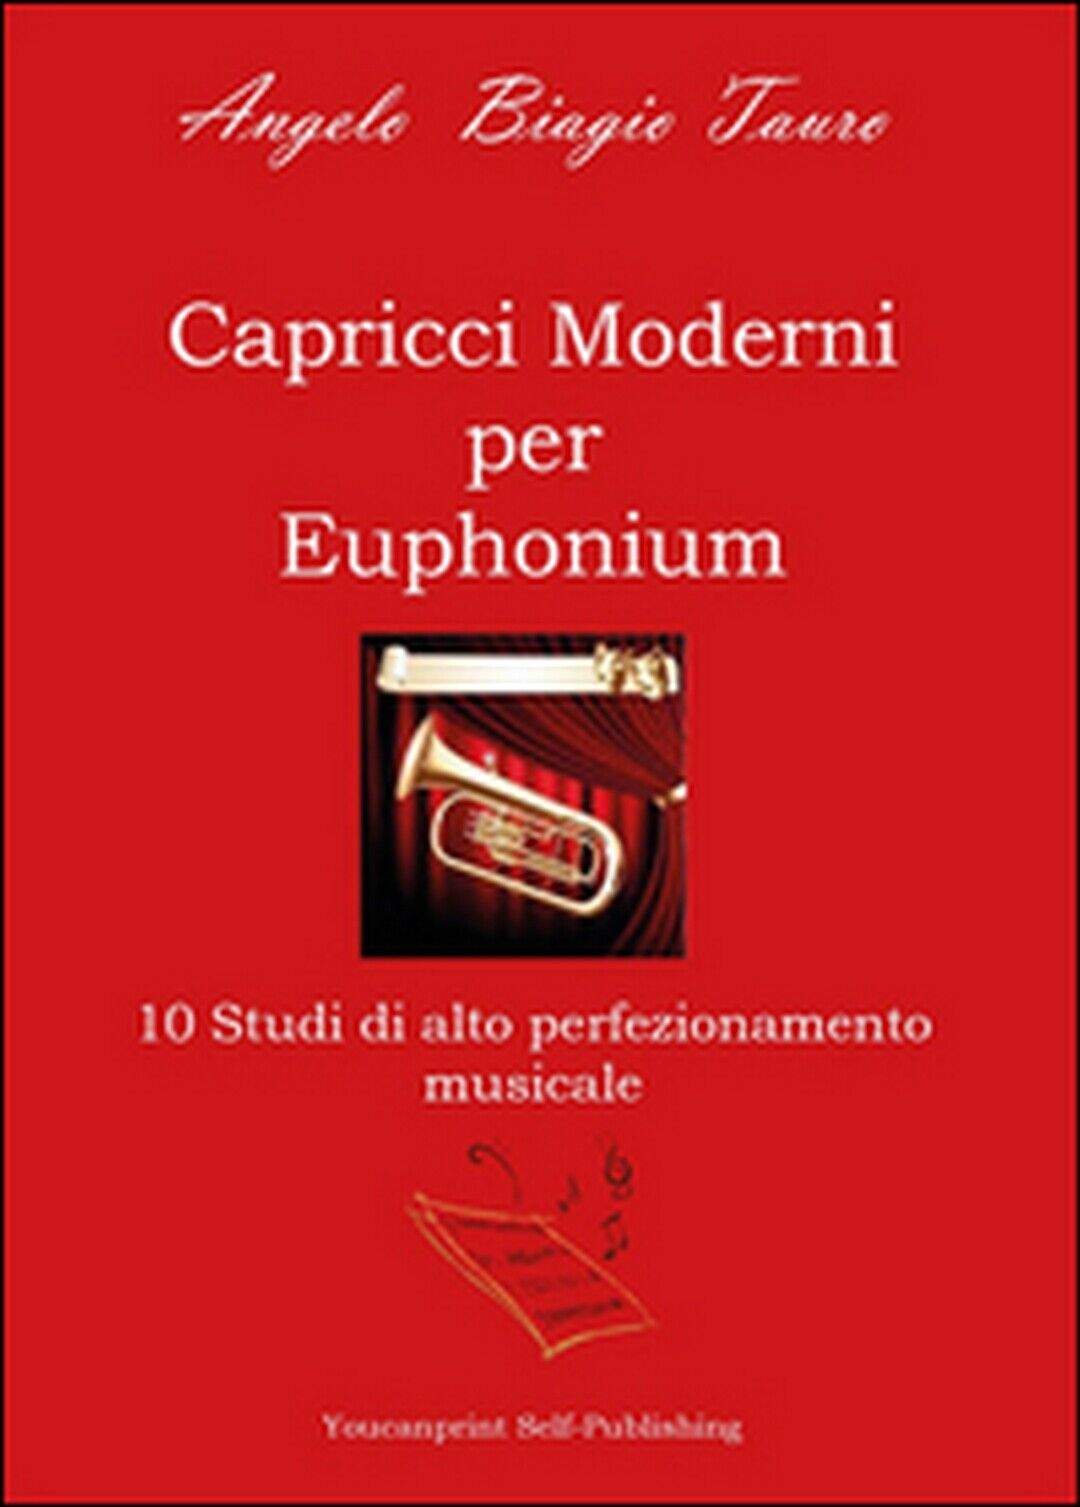 Capricci moderni per Euphonium  di Angelo B. Tauro,  2015,  Youcanprint